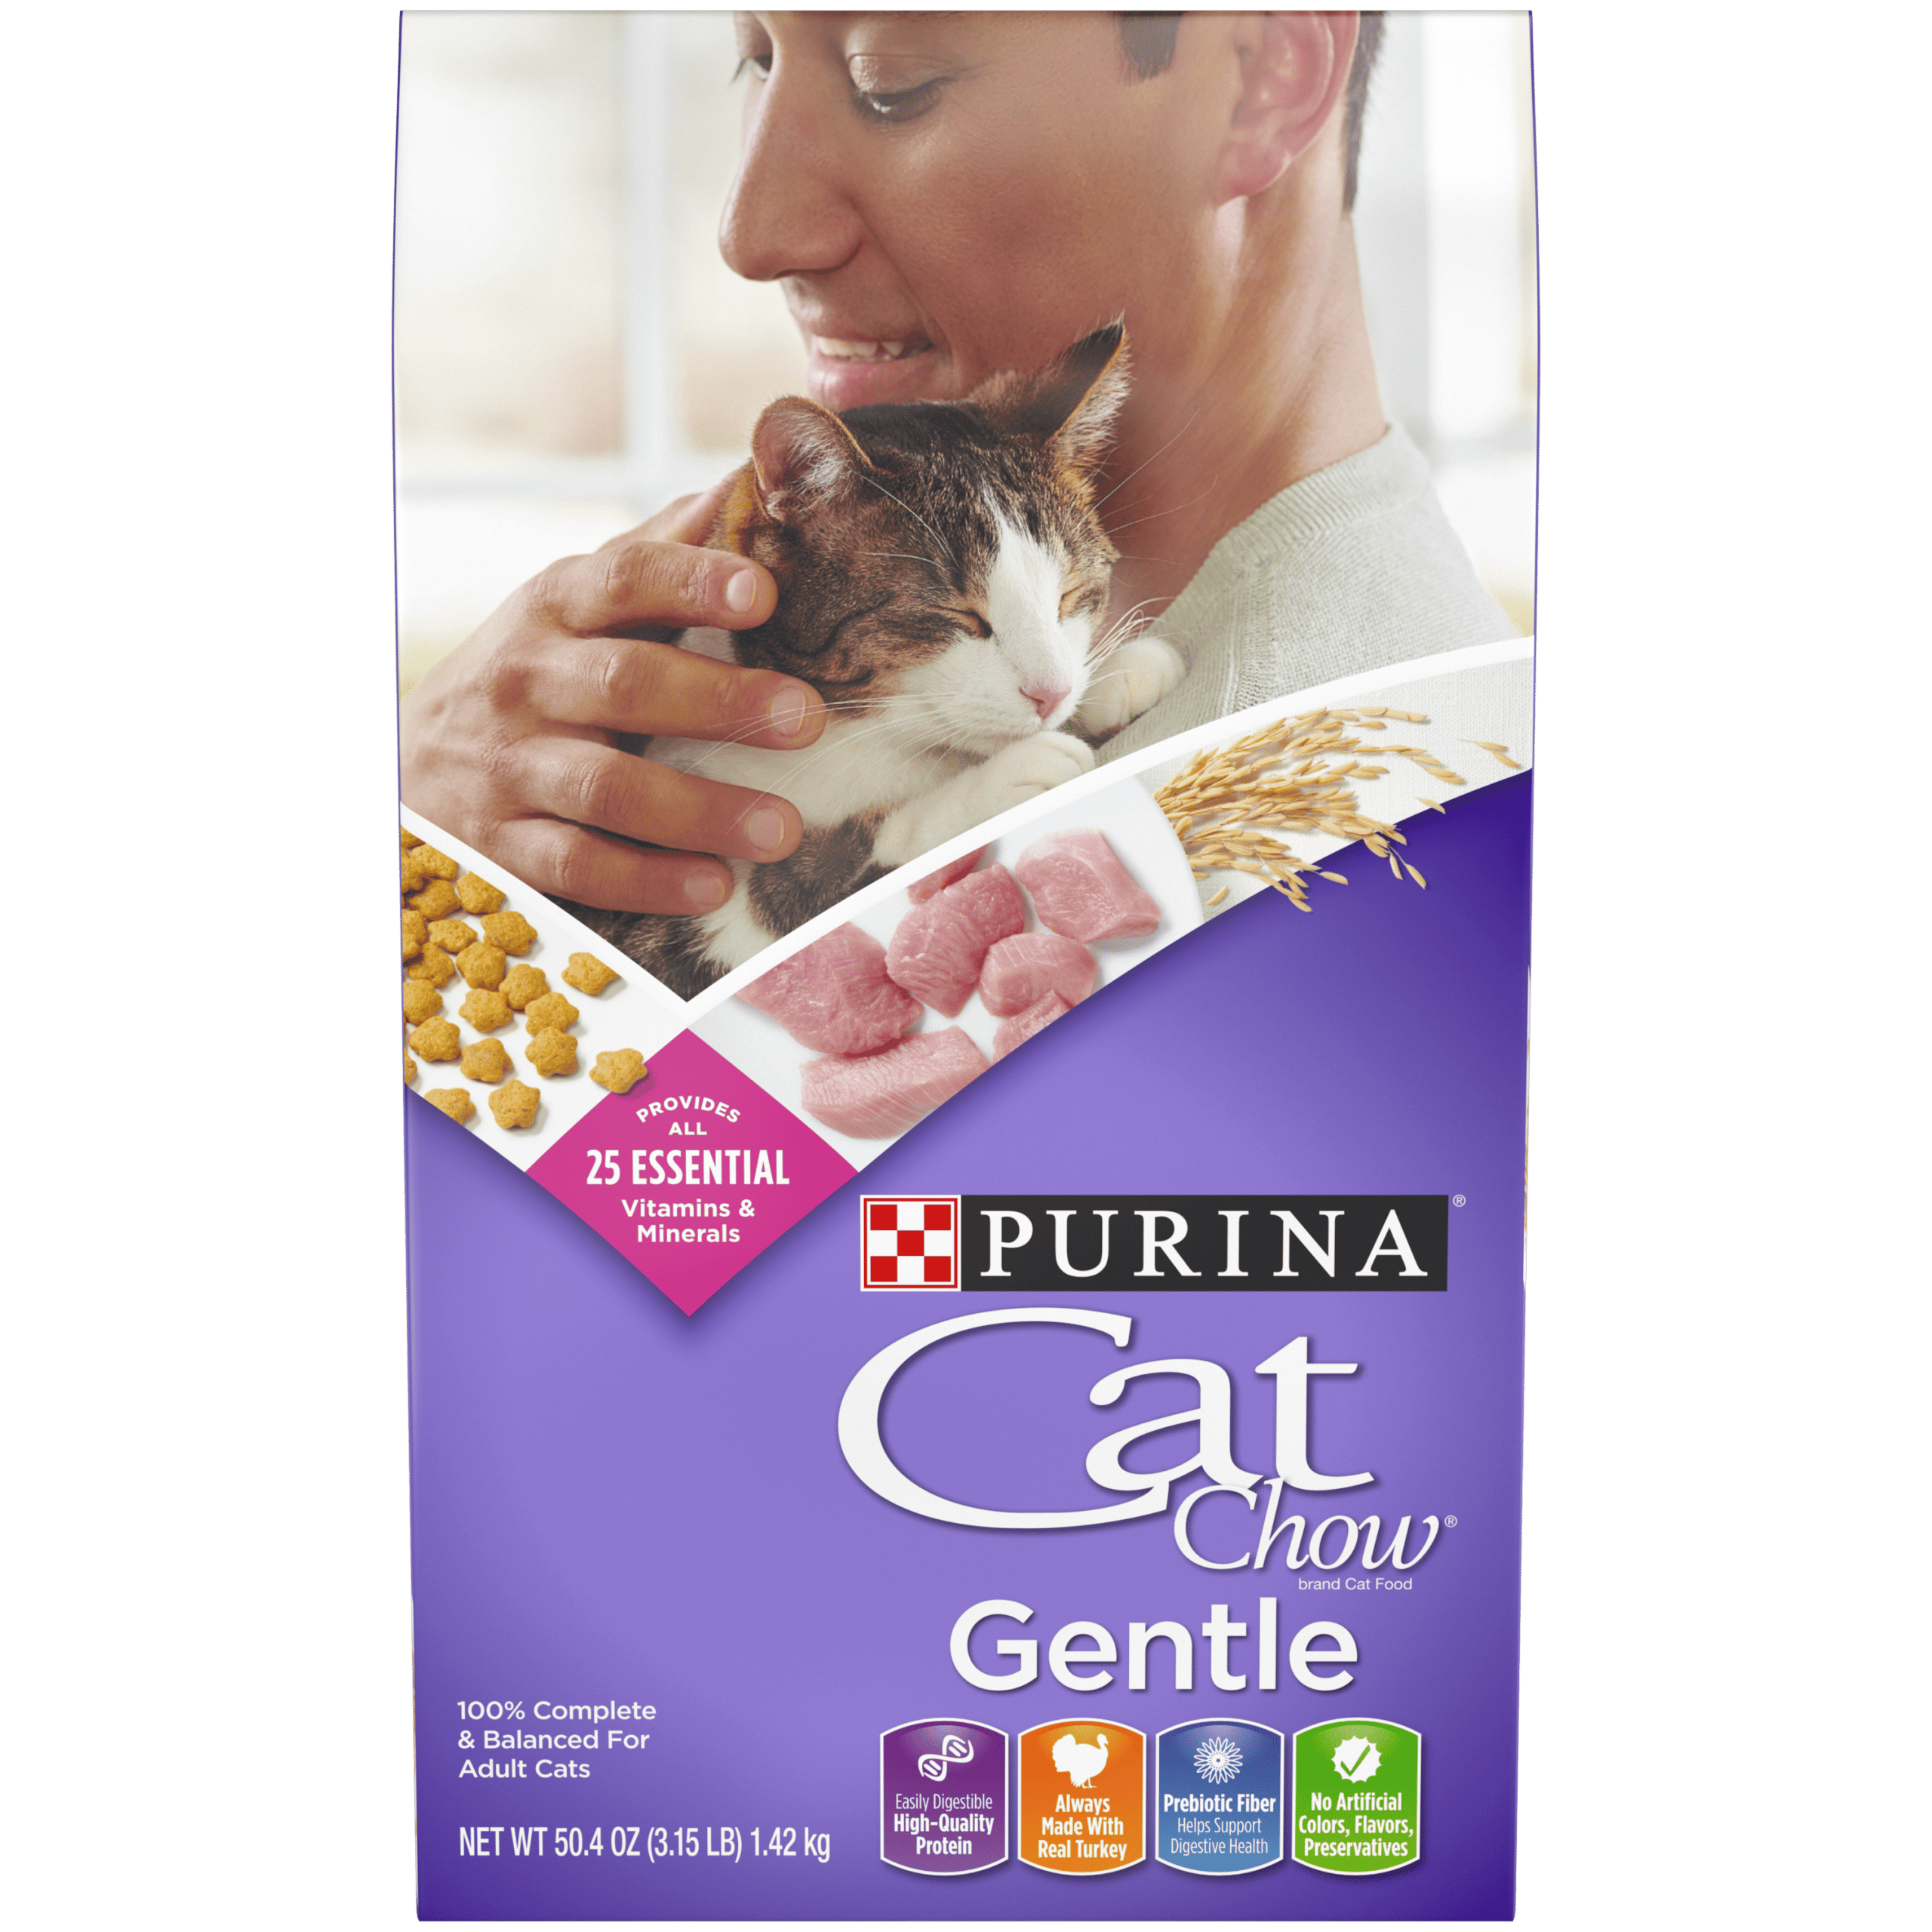 Purina Cat Chow Sensitive Stomach Dry Cat Food, Gentle, 3.15 lb. Bag ...